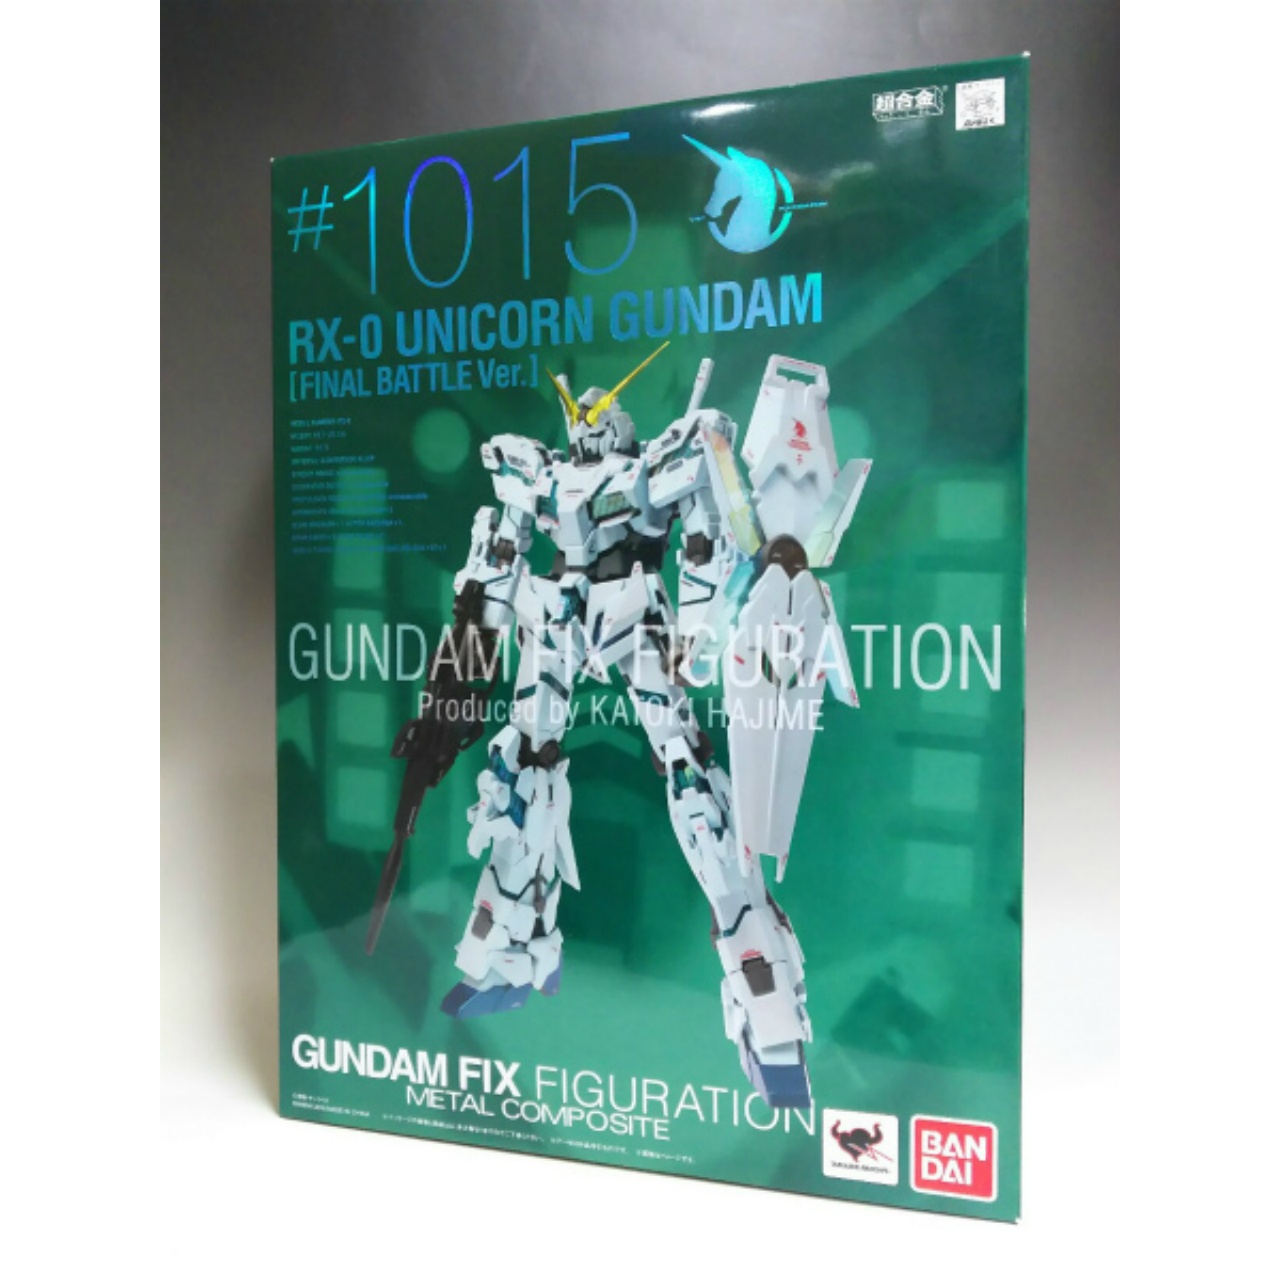 METAL COMPOSITE #1015 Unicorn Gundam (Final Battle Ver.)